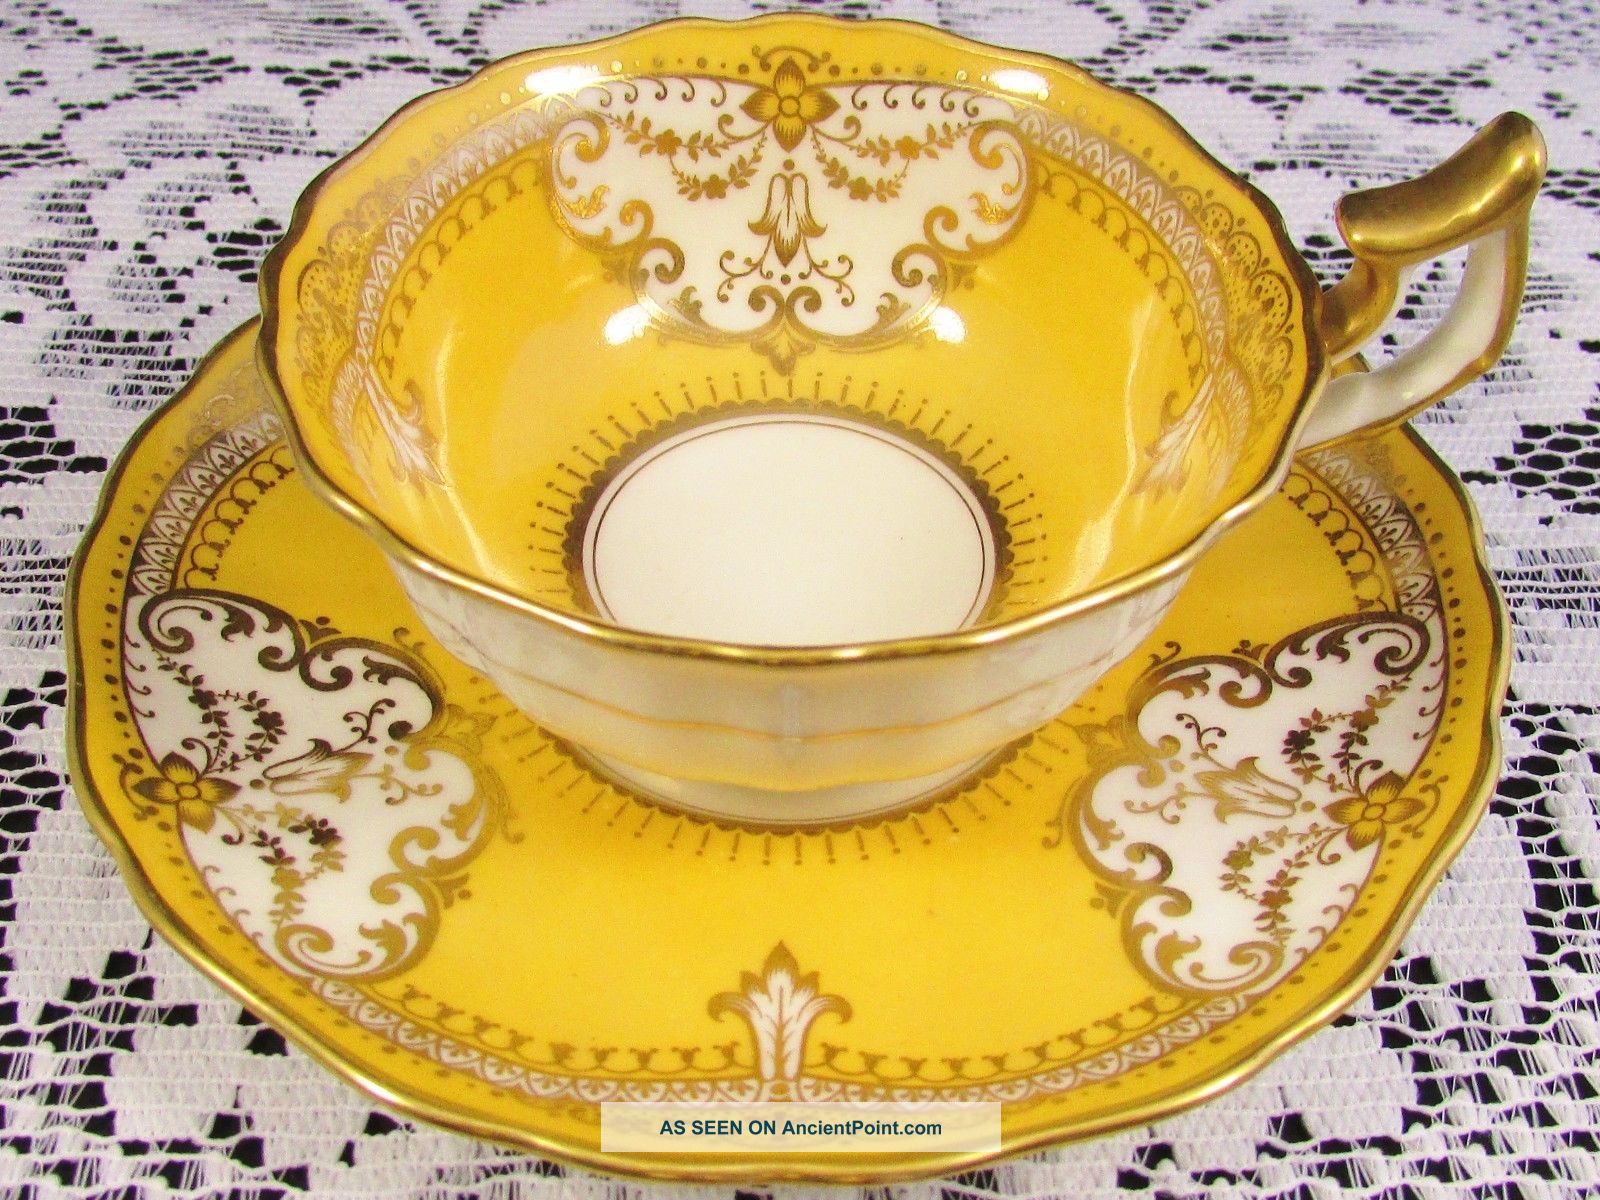 Cauldon Lavish Gold Gilt Designs Bright Yellow Tea Cup And Saucer Cups & Saucers photo